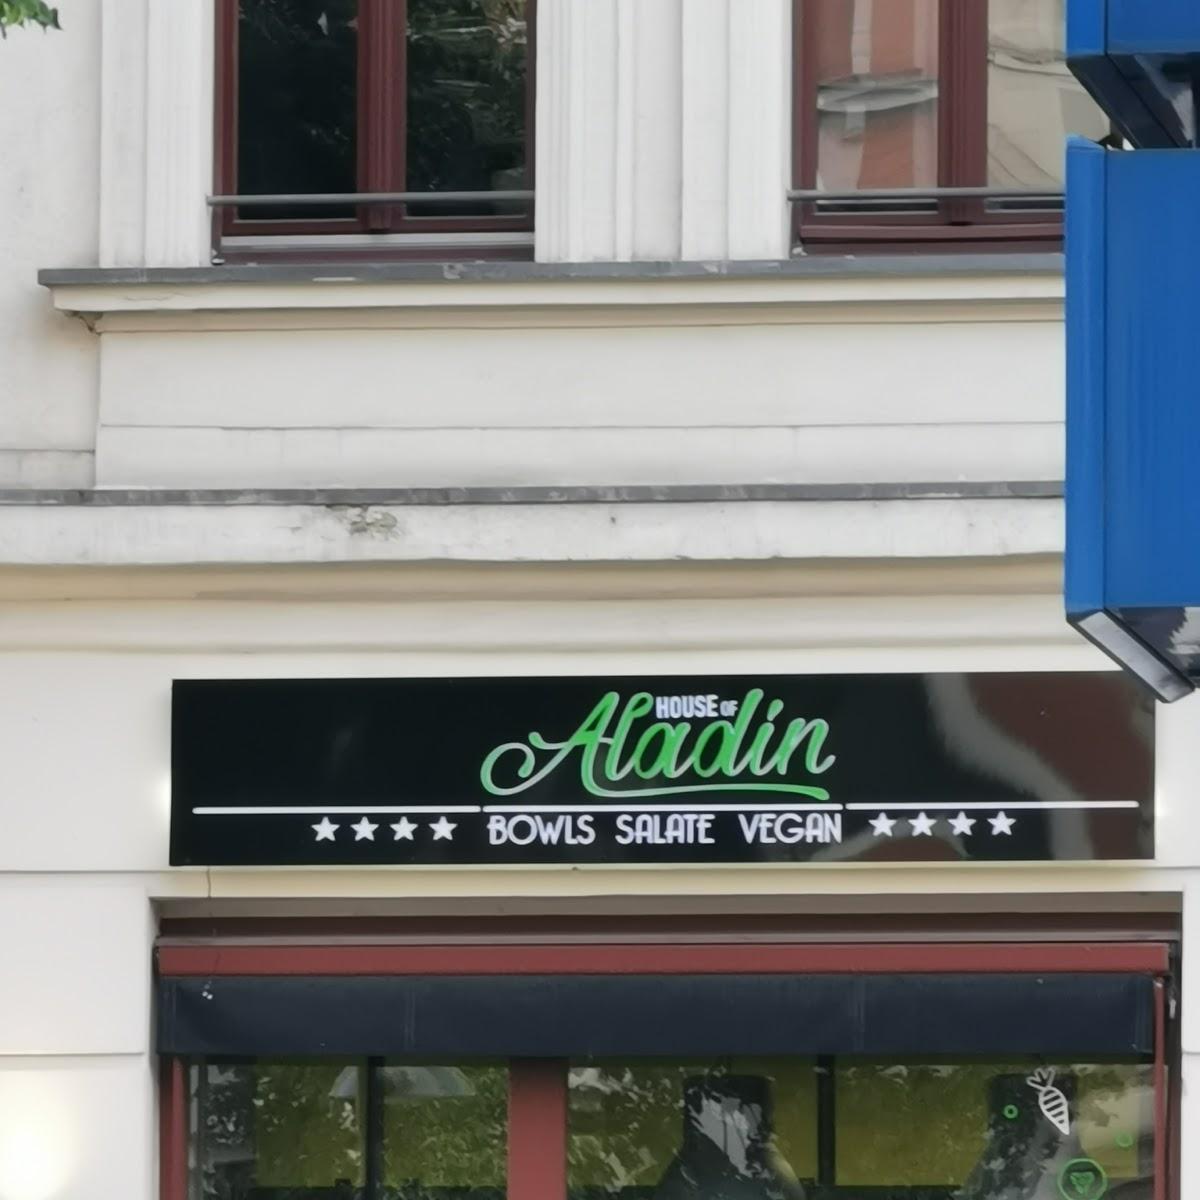 Restaurant "House of Aladin" in Leipzig